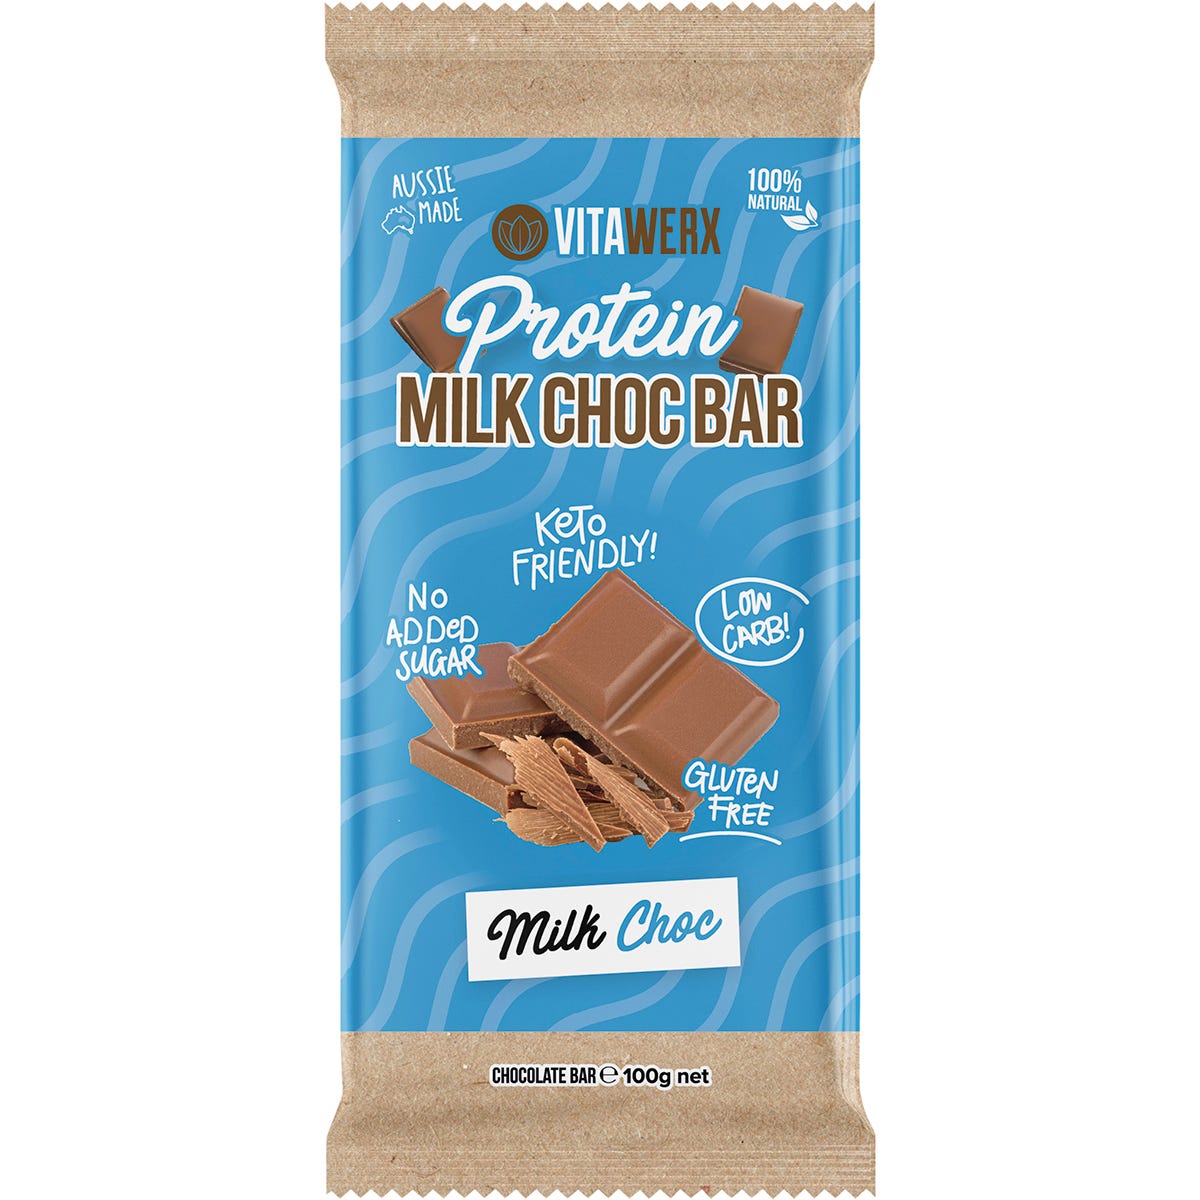 Vitawerx Protein Milk Chocolate Bar 100g - Dr Earth - Chocolate & Carob